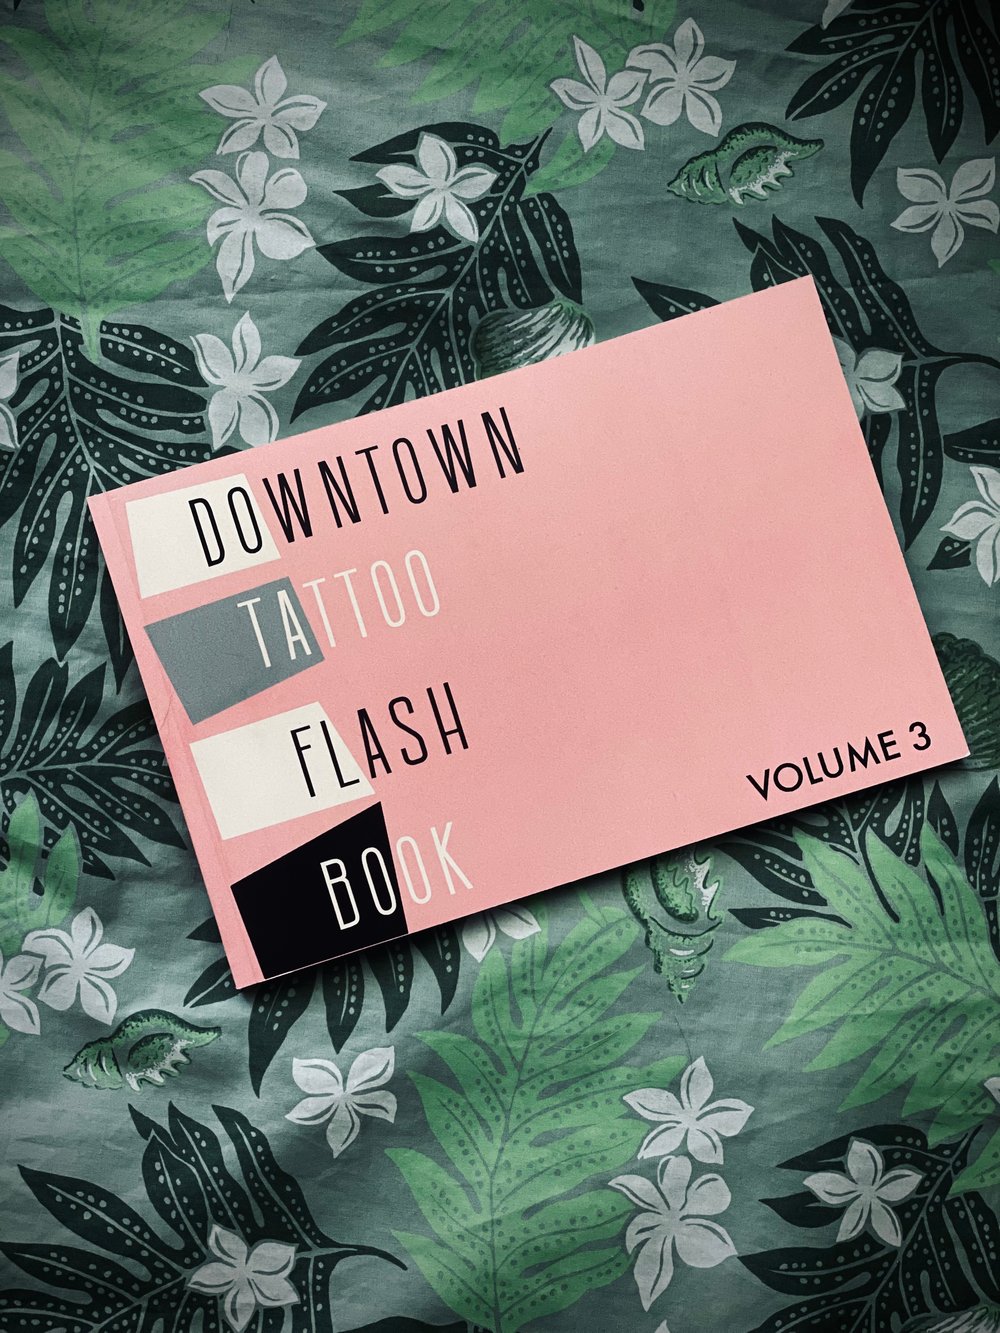 Downtown Flash Book Vol. 3